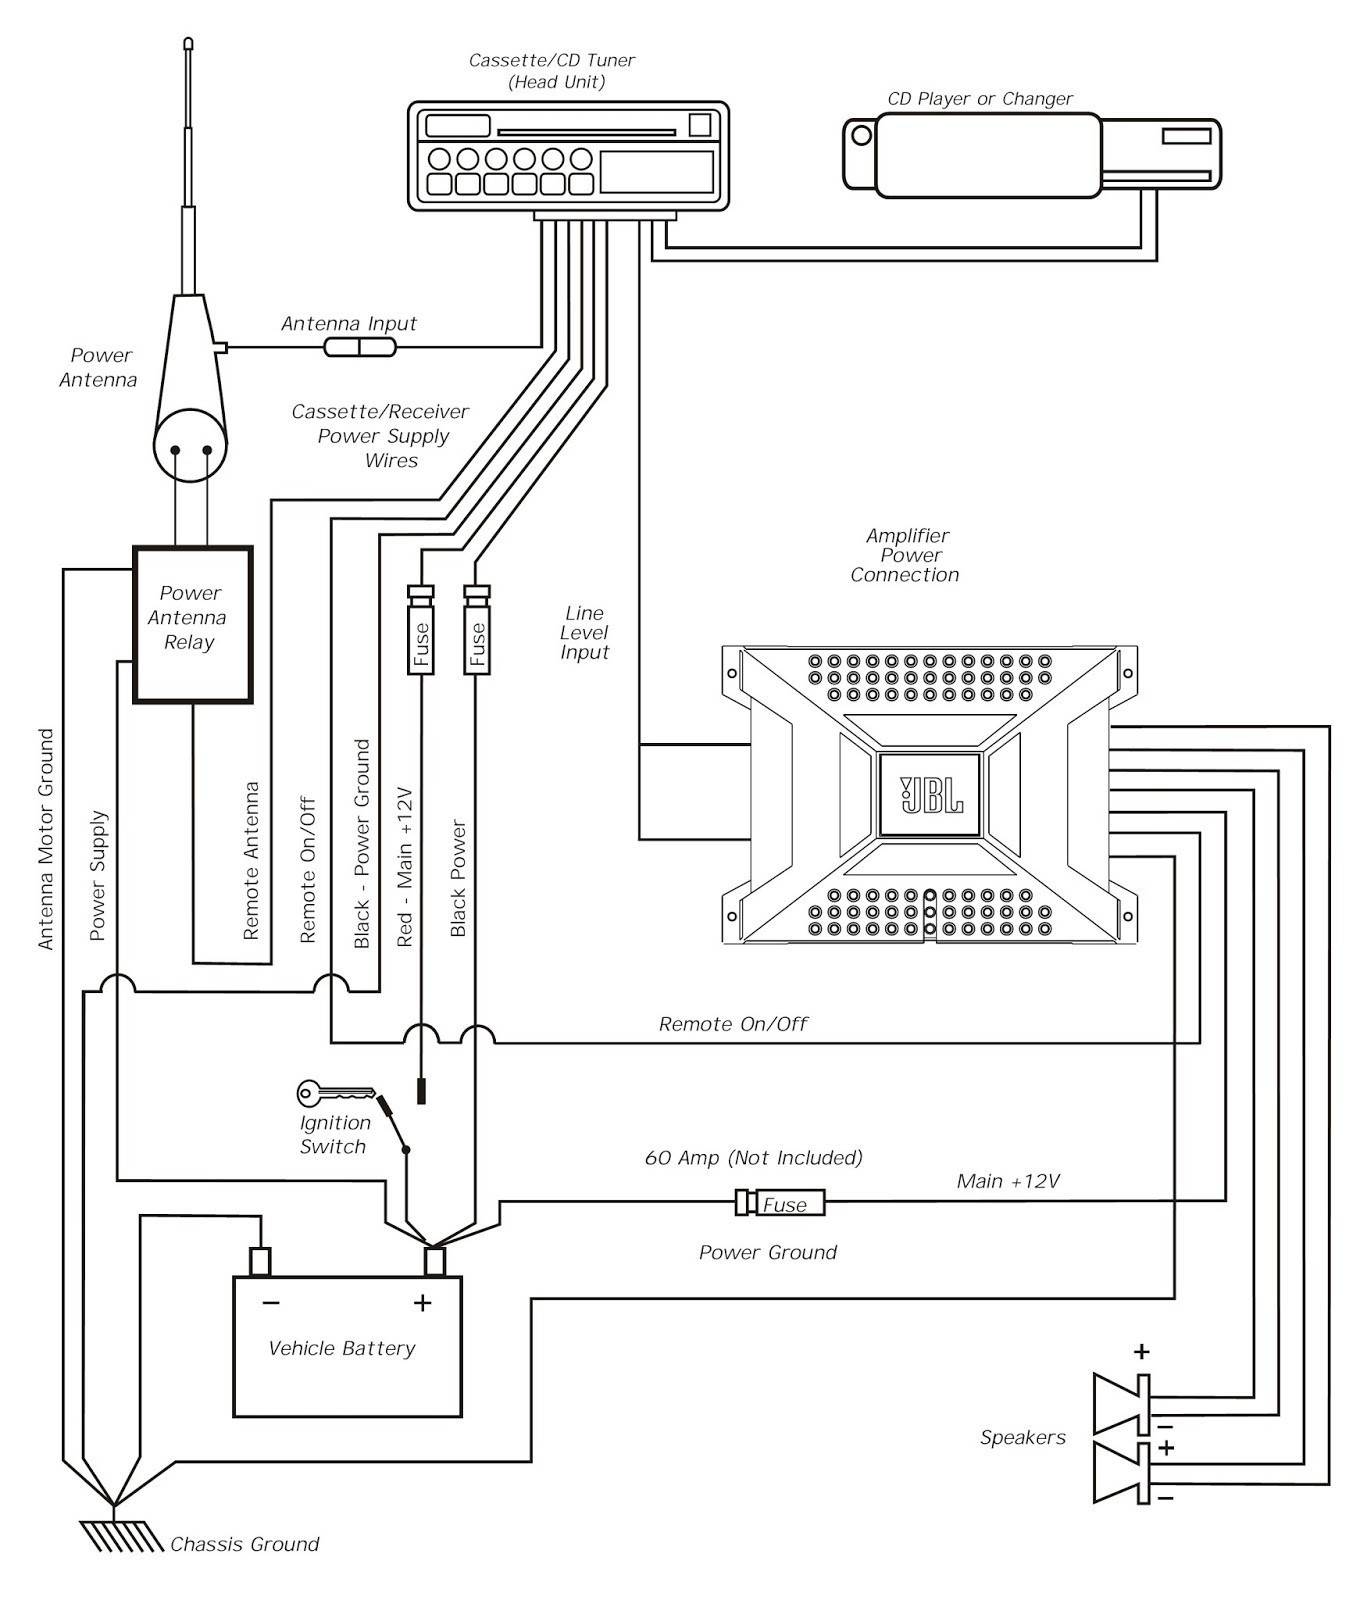 Honda Accord Radio Wiring Diagram mikulskilawoffices on honda audio system wiring diagram